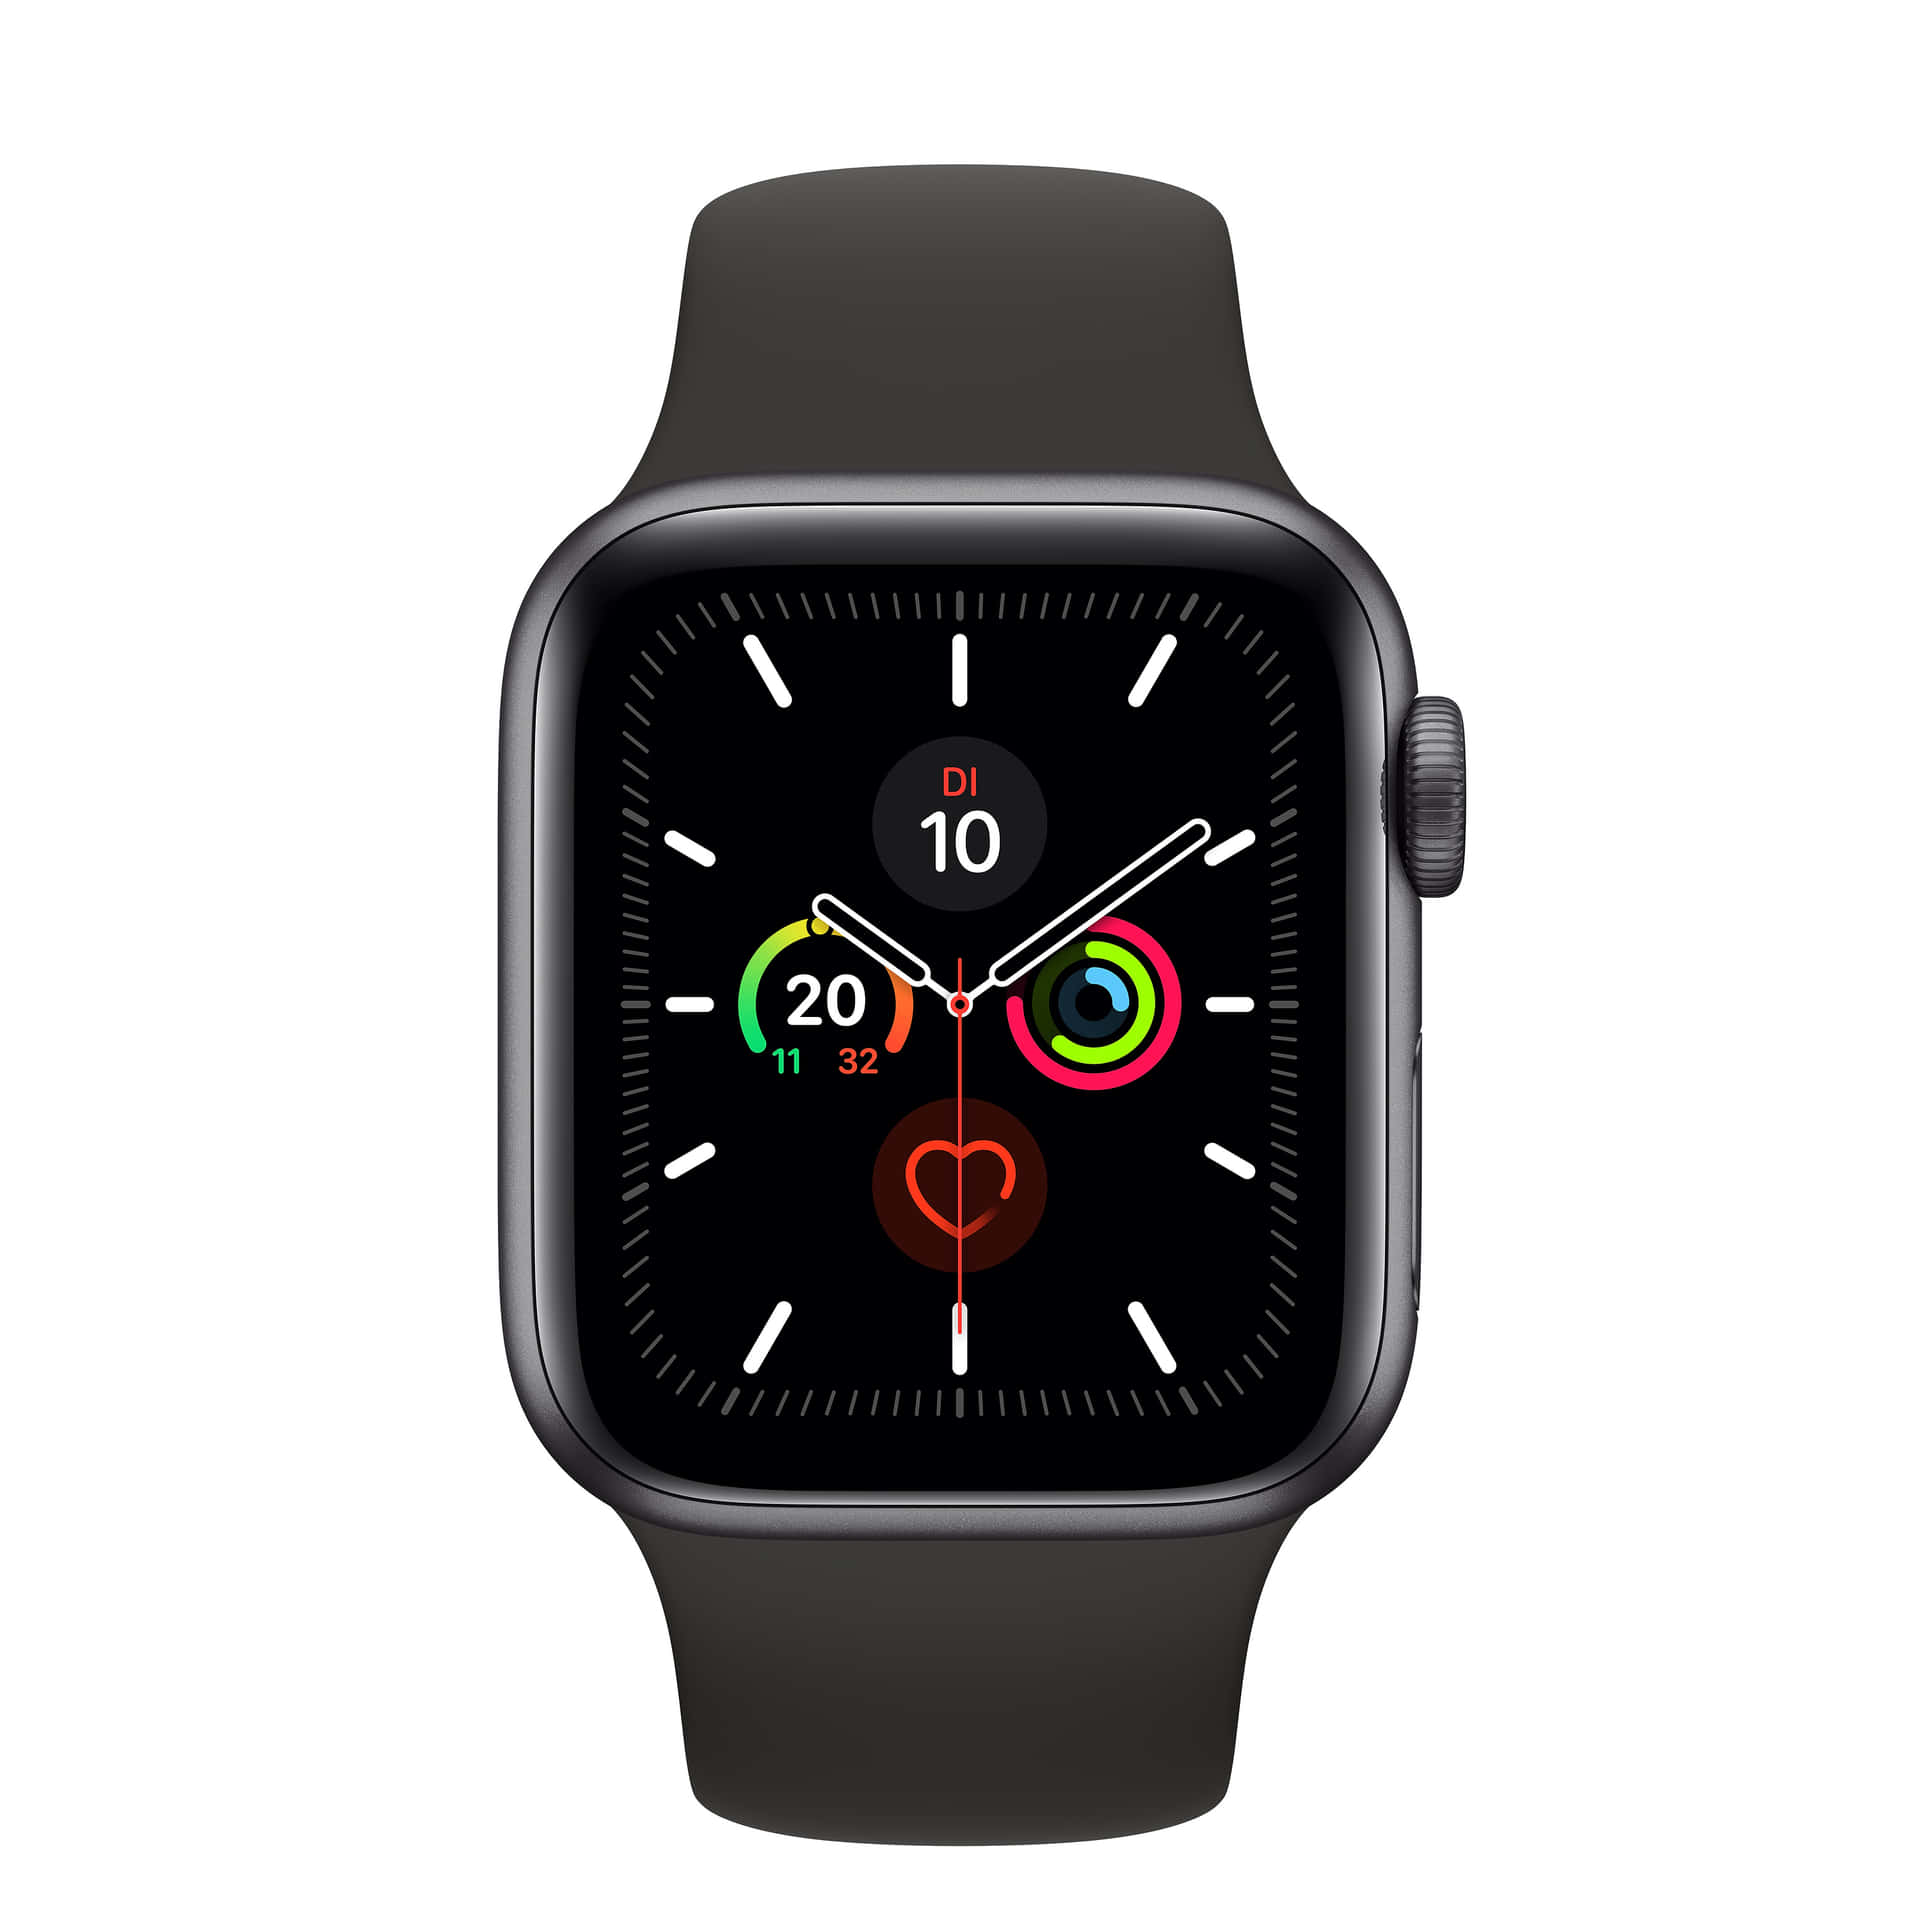 Applewatch Series 5 - Svart